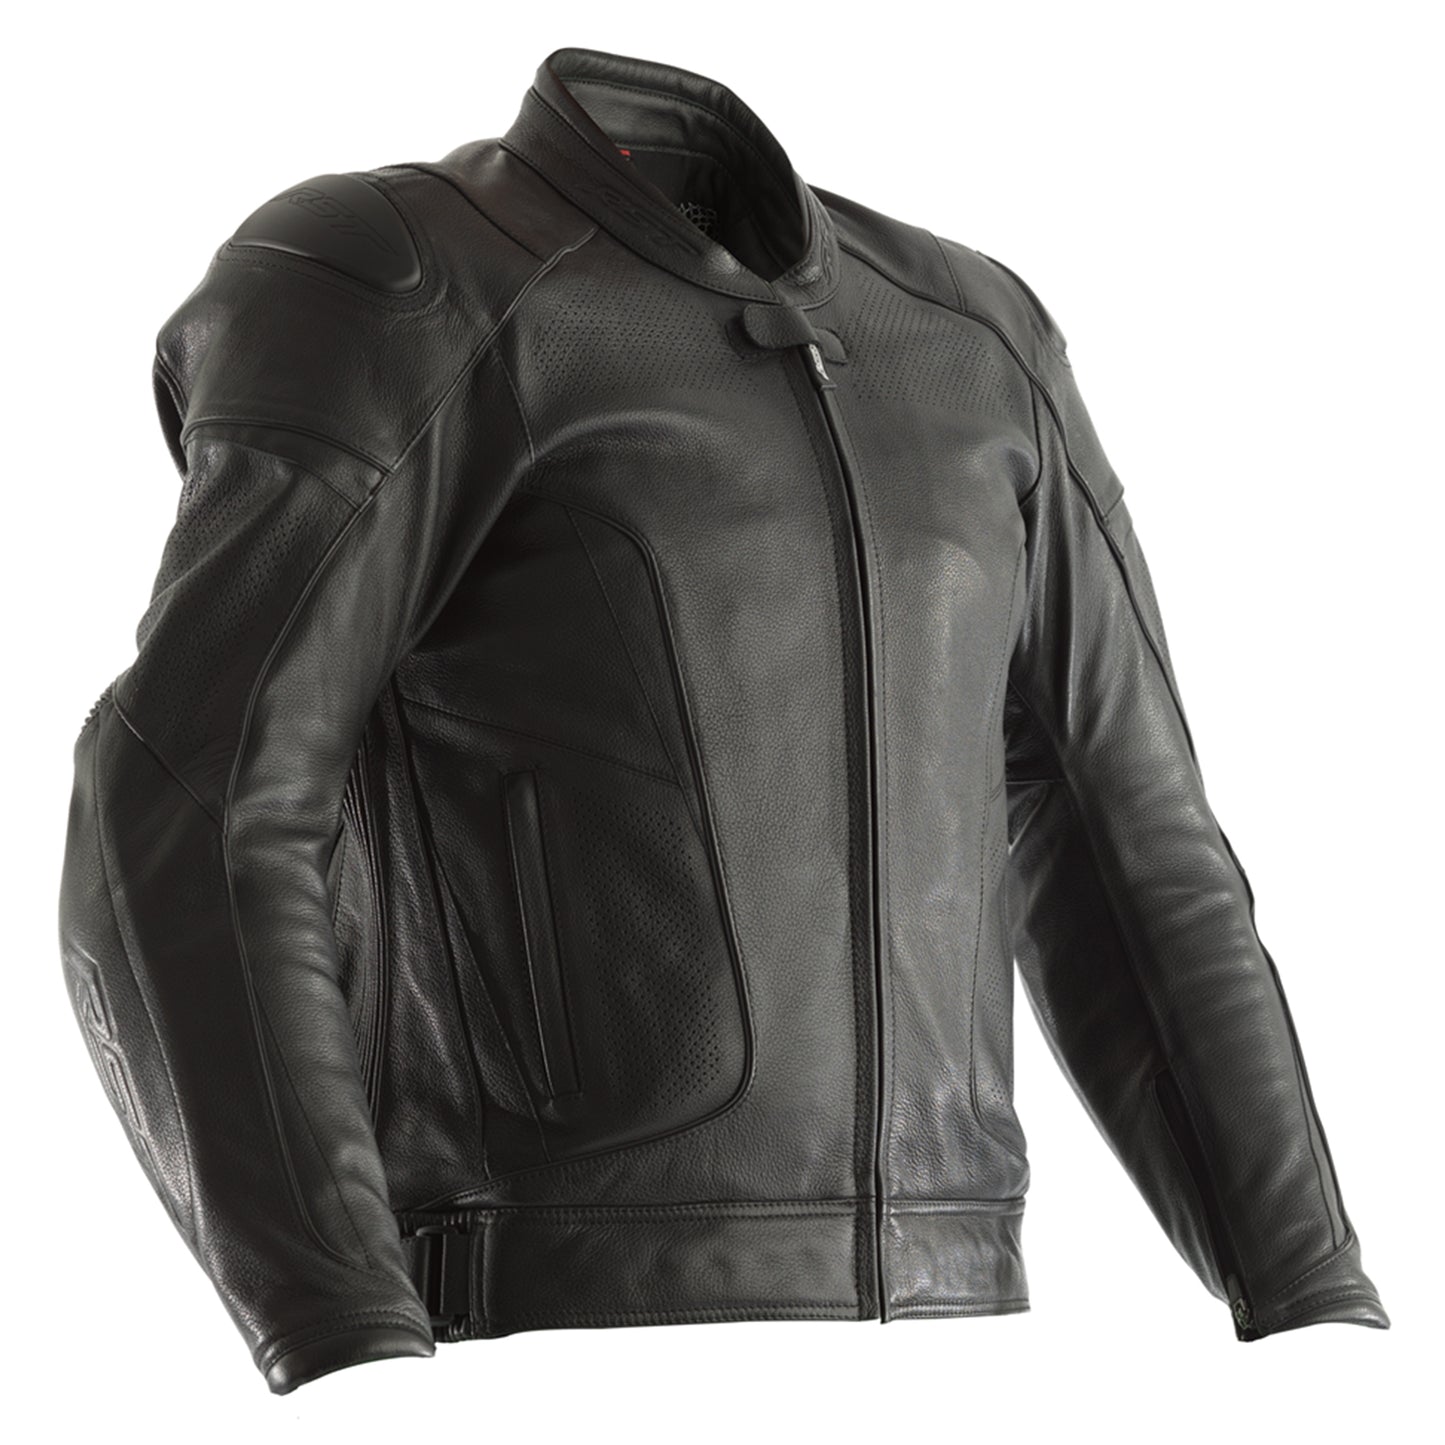 RST GT Airbag CE Men's Leather Riding Jacket - Black (2973)